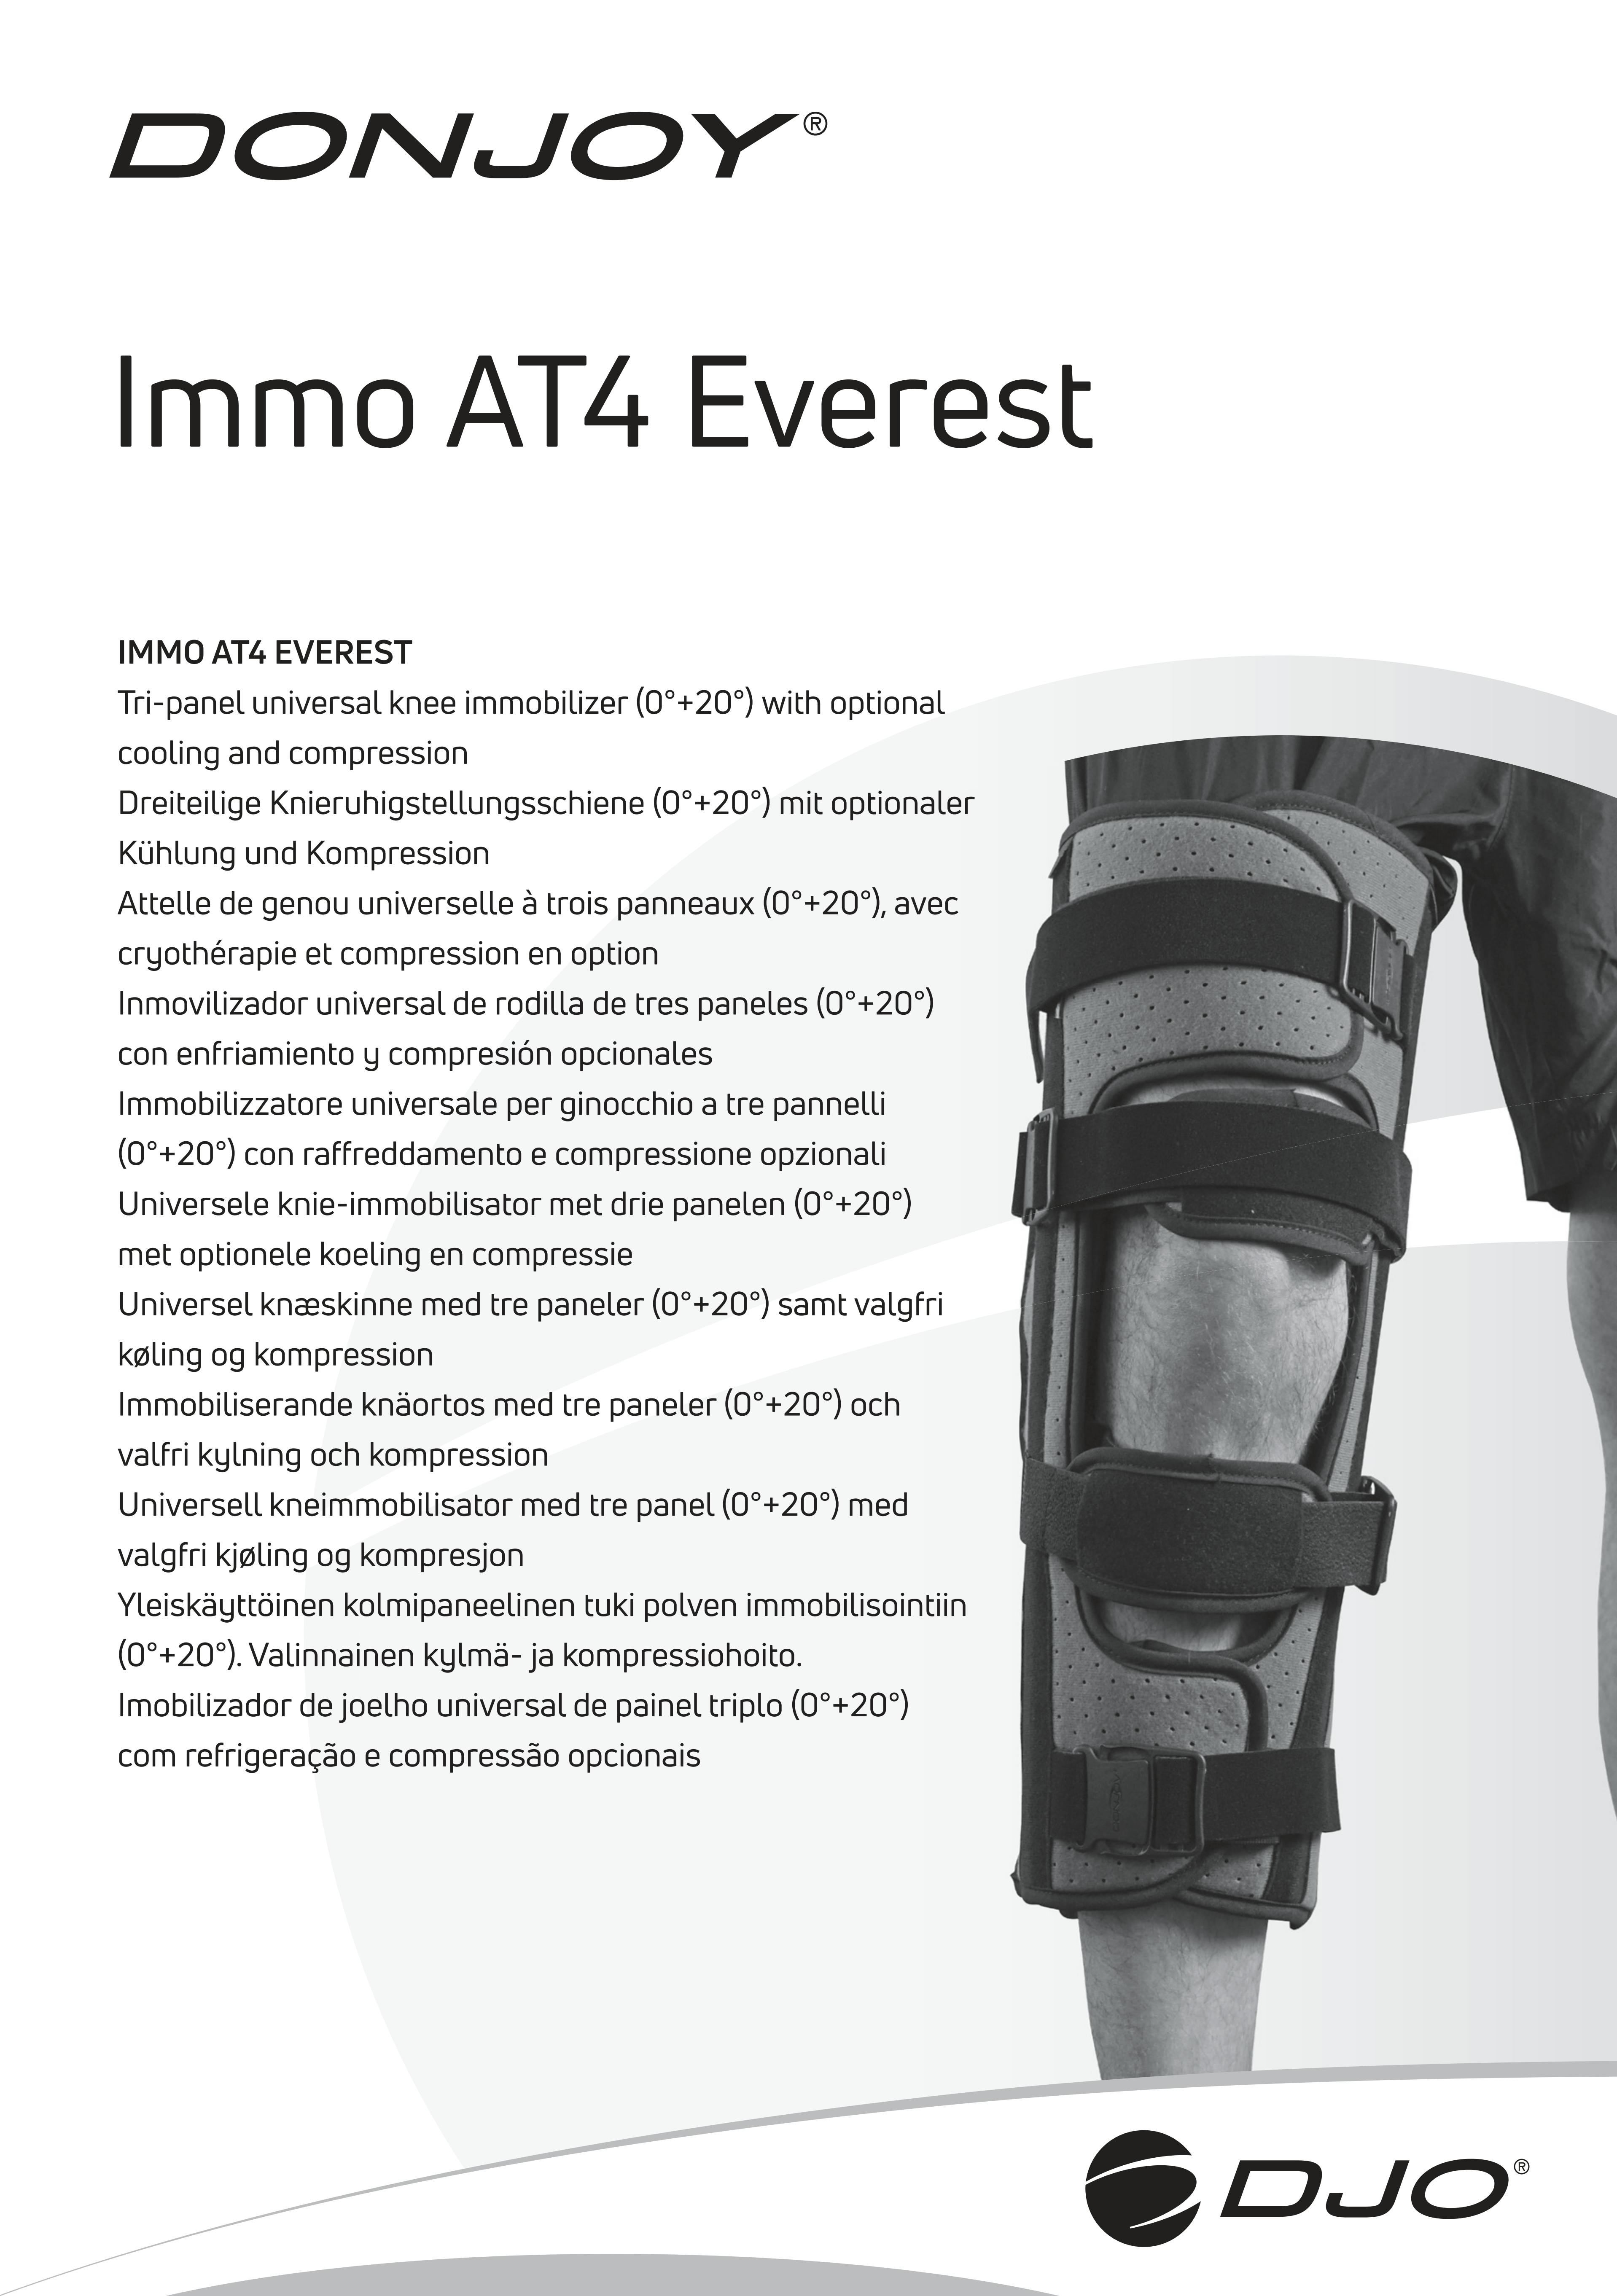 Gebrauchsanleitung_DONJOY_Immo-AT4-Everest_13-00197-REV-C-2022-01-06.pdf.pdf